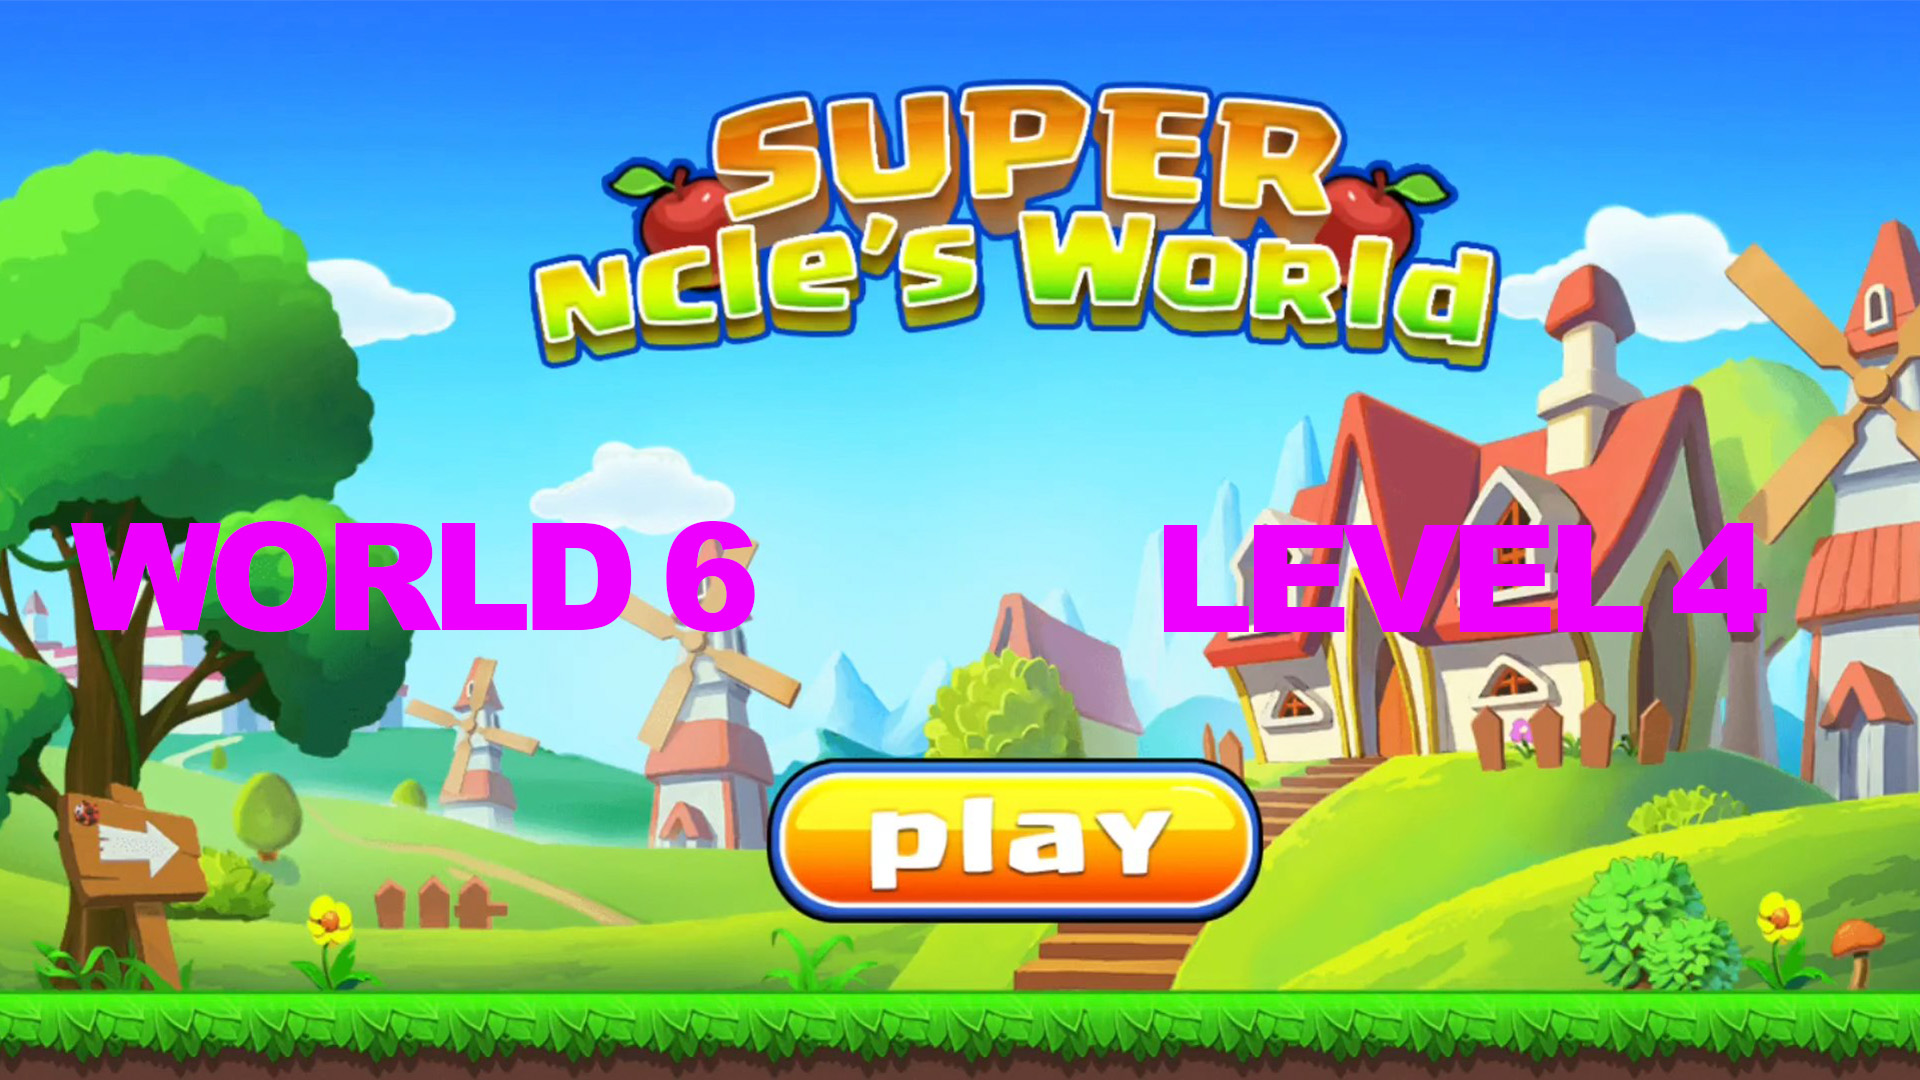 Super ncle's  World 6. Level 4.